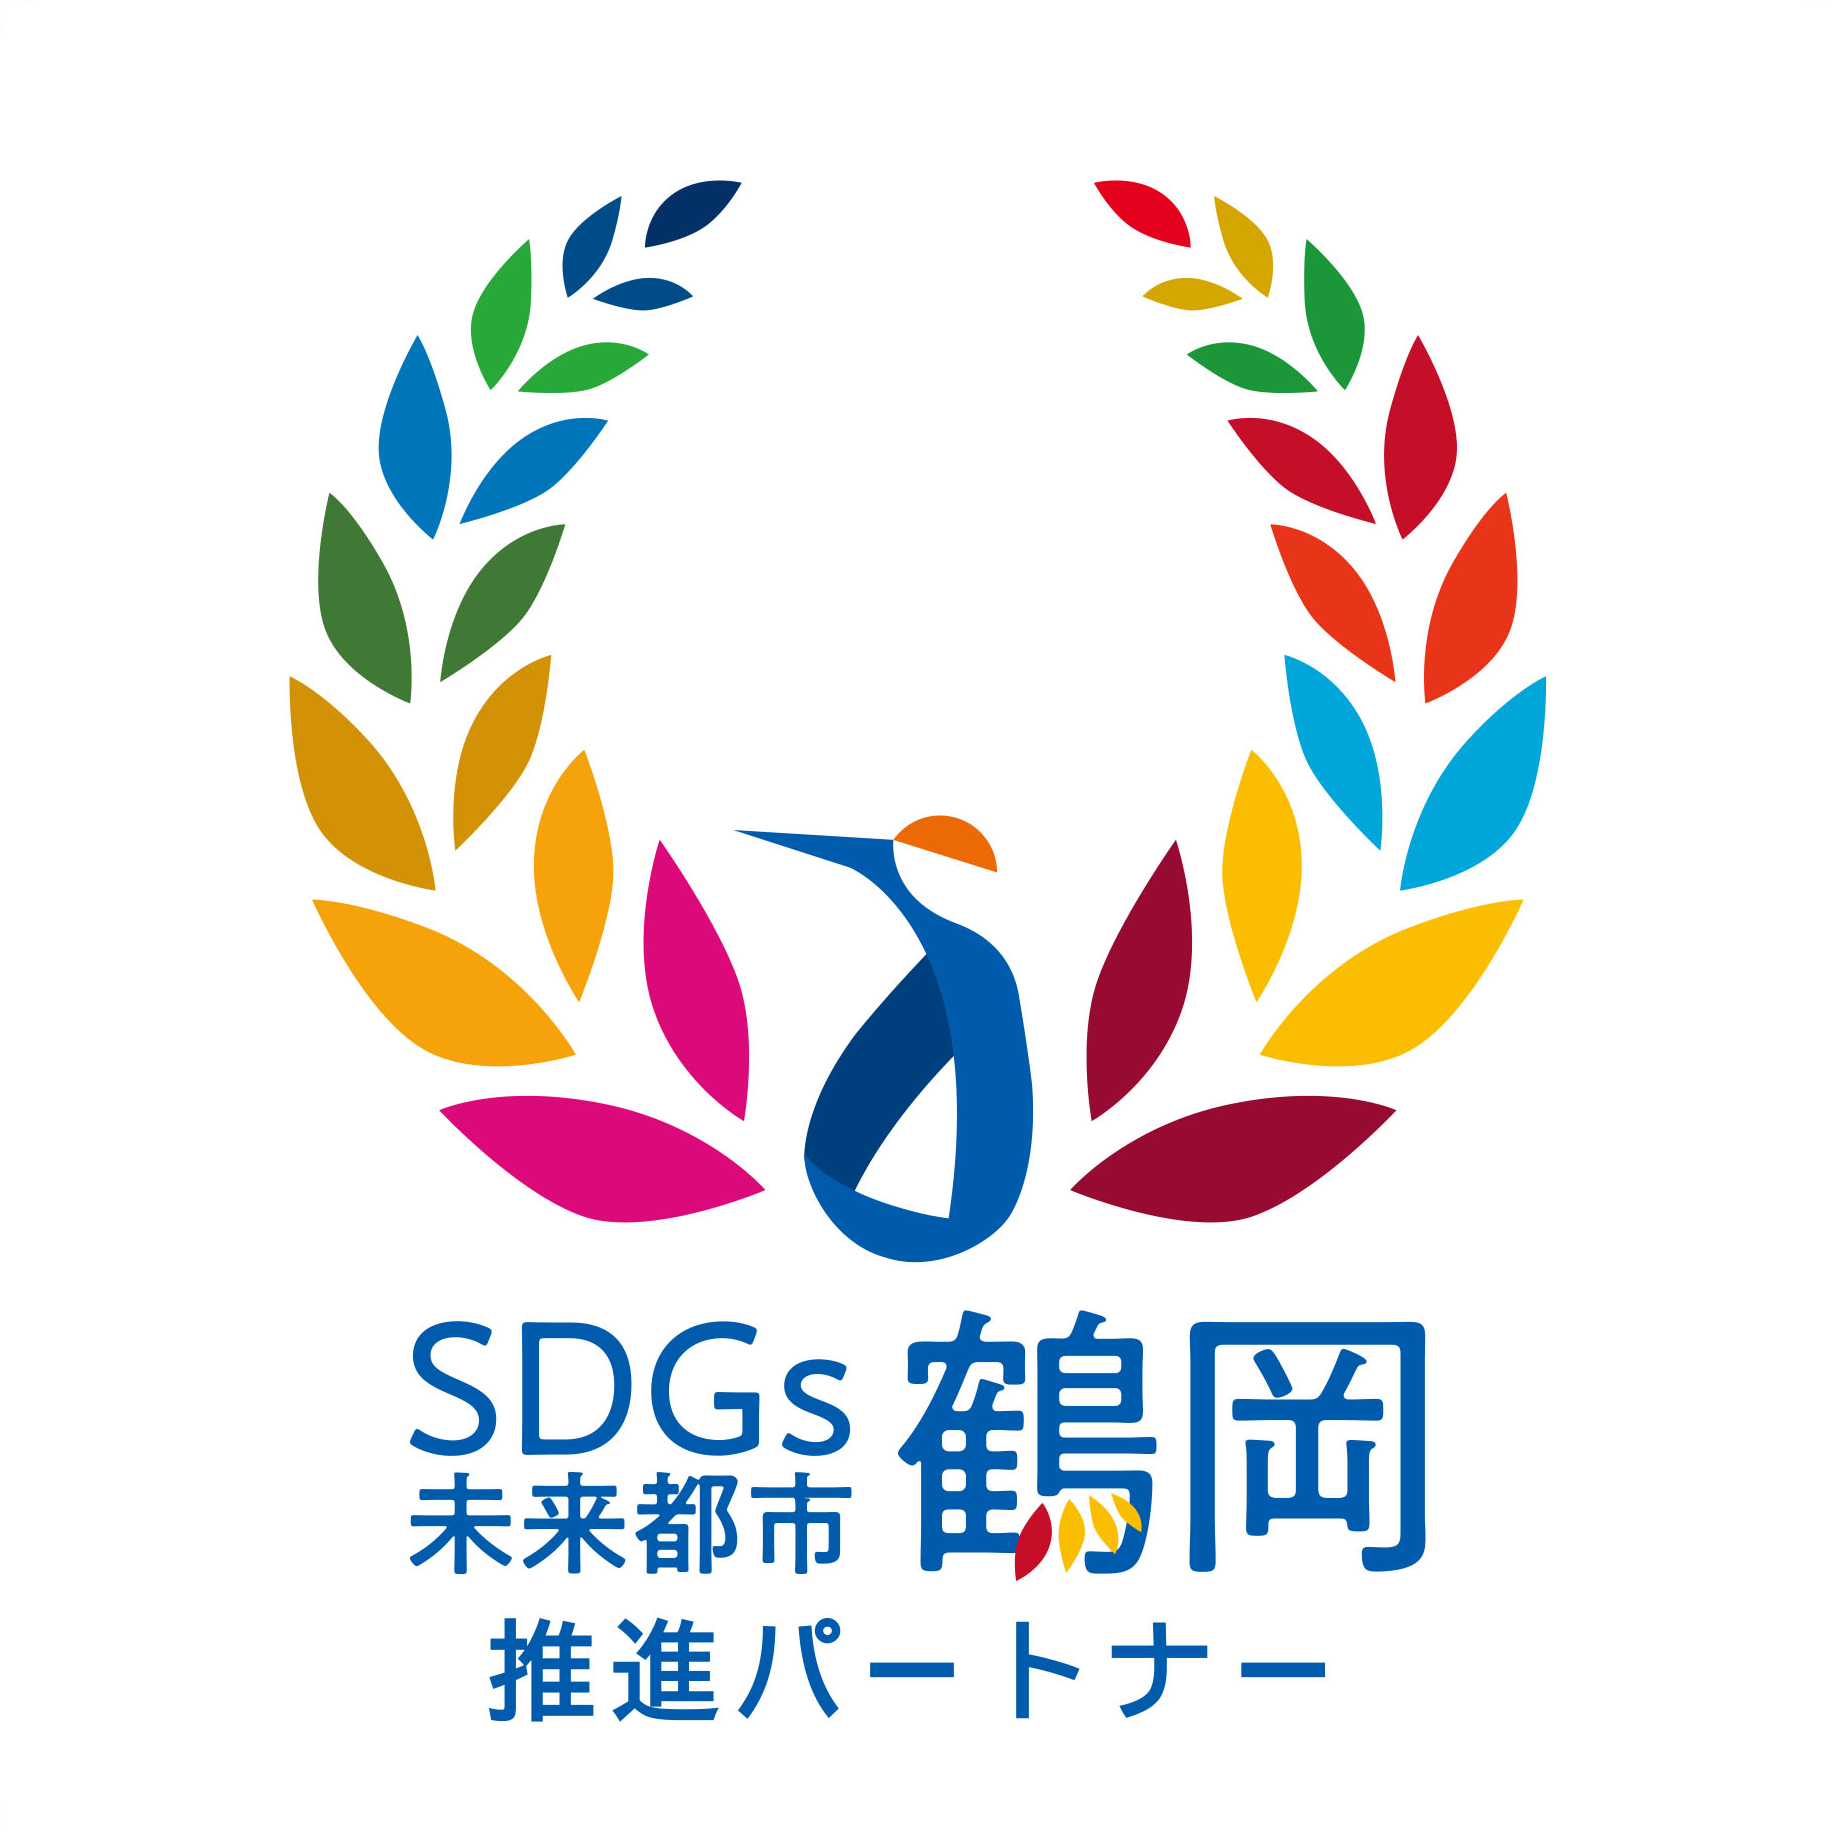 【NEWS】SDGs未来都市鶴岡推進パートナー企業に登録されました